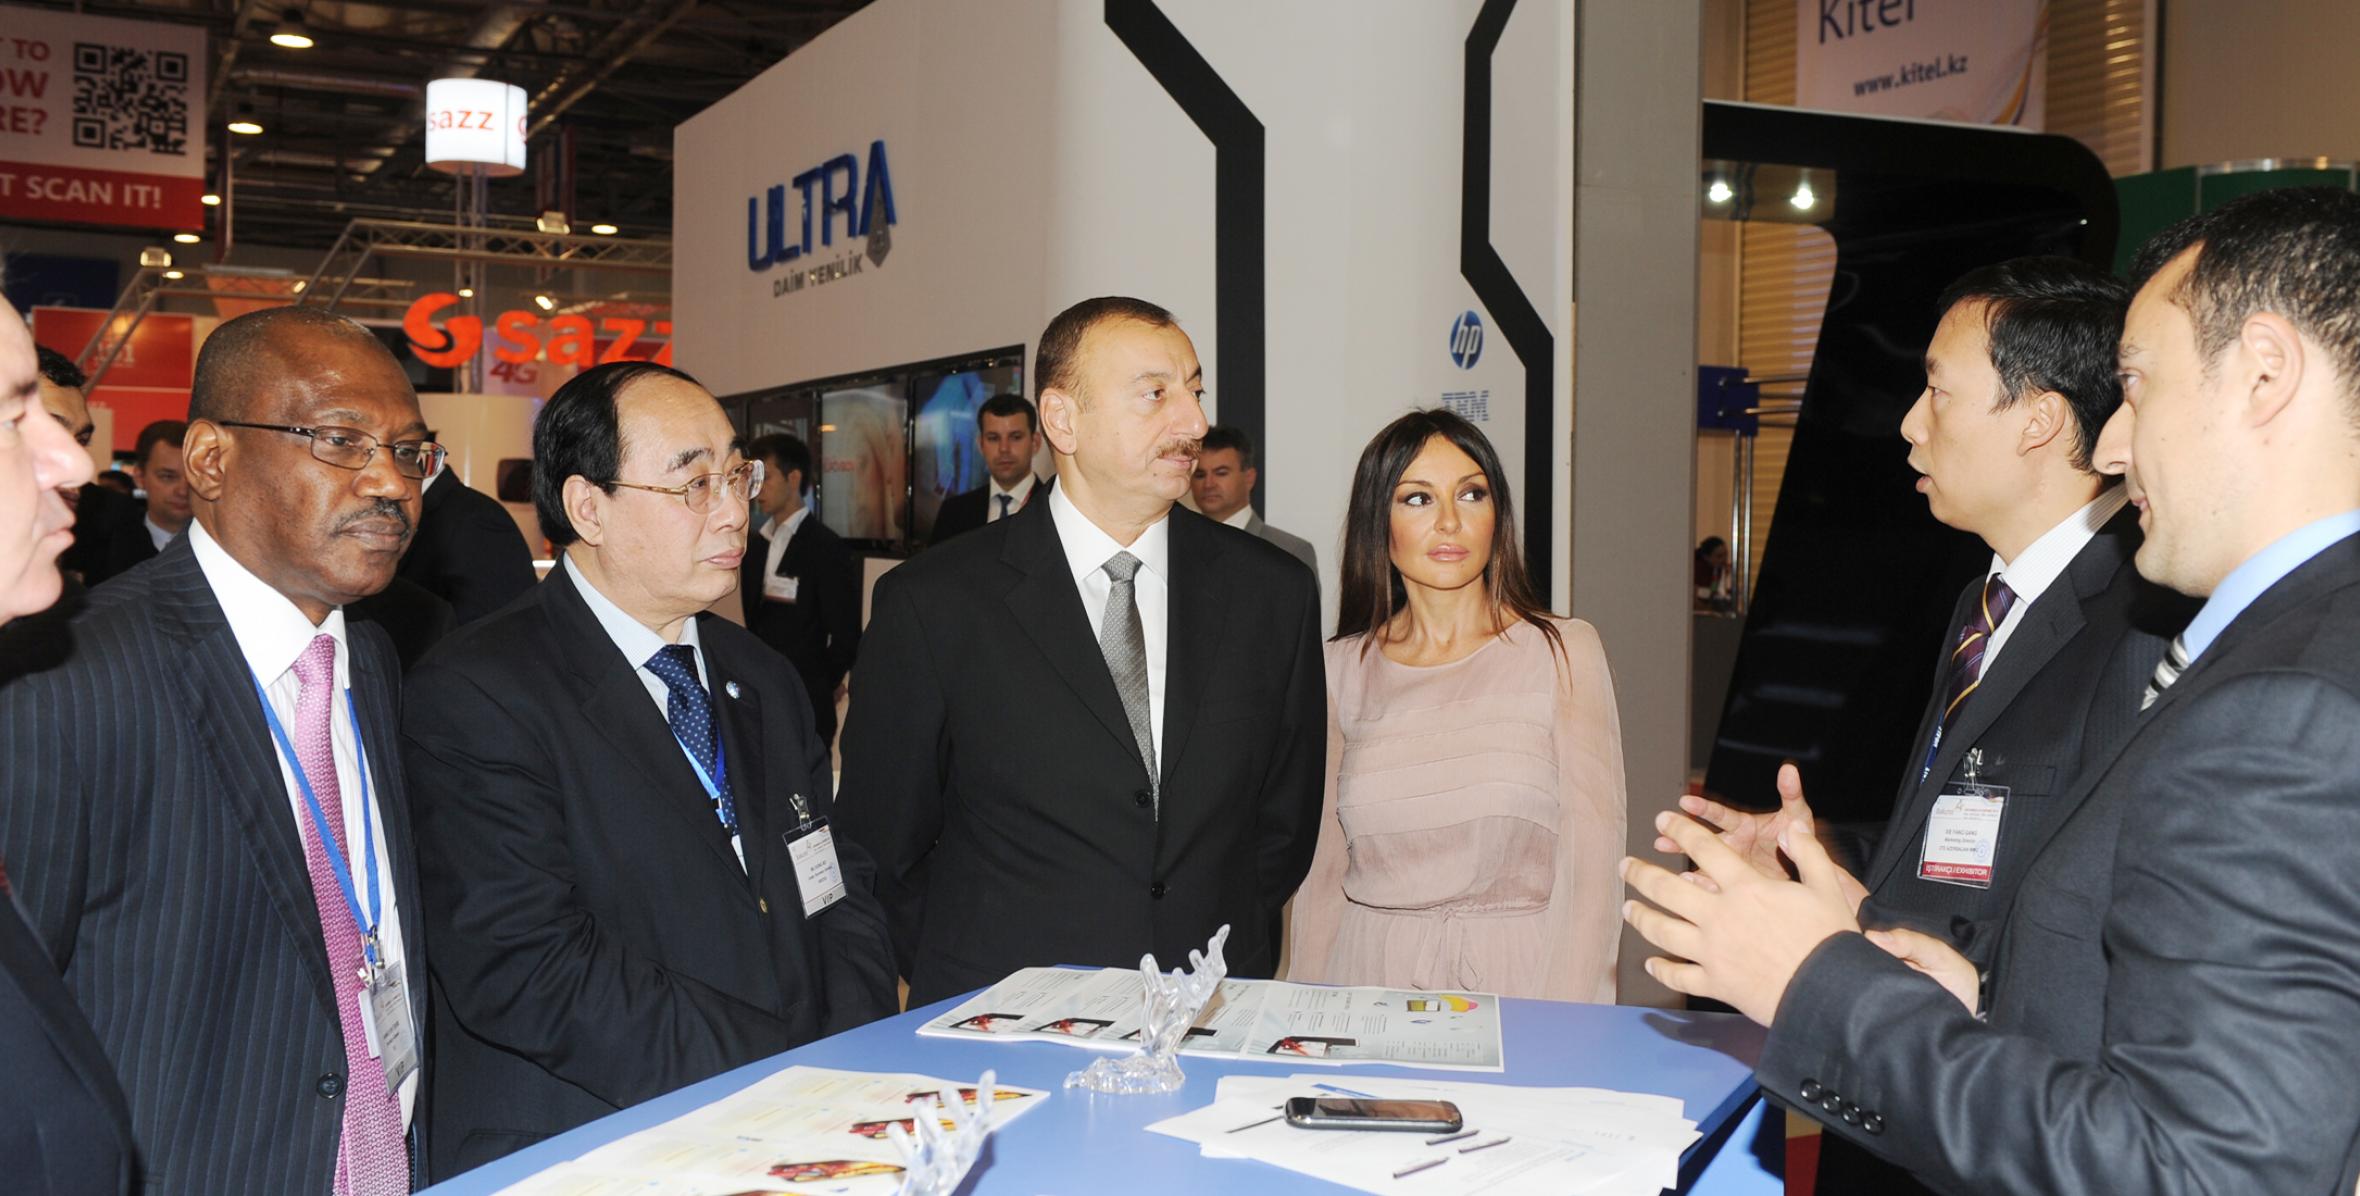 Ilham Aliyev reviewed the 18th Azerbaijan international exhibition of telecommunication and information technologies “BakuTel-2012”